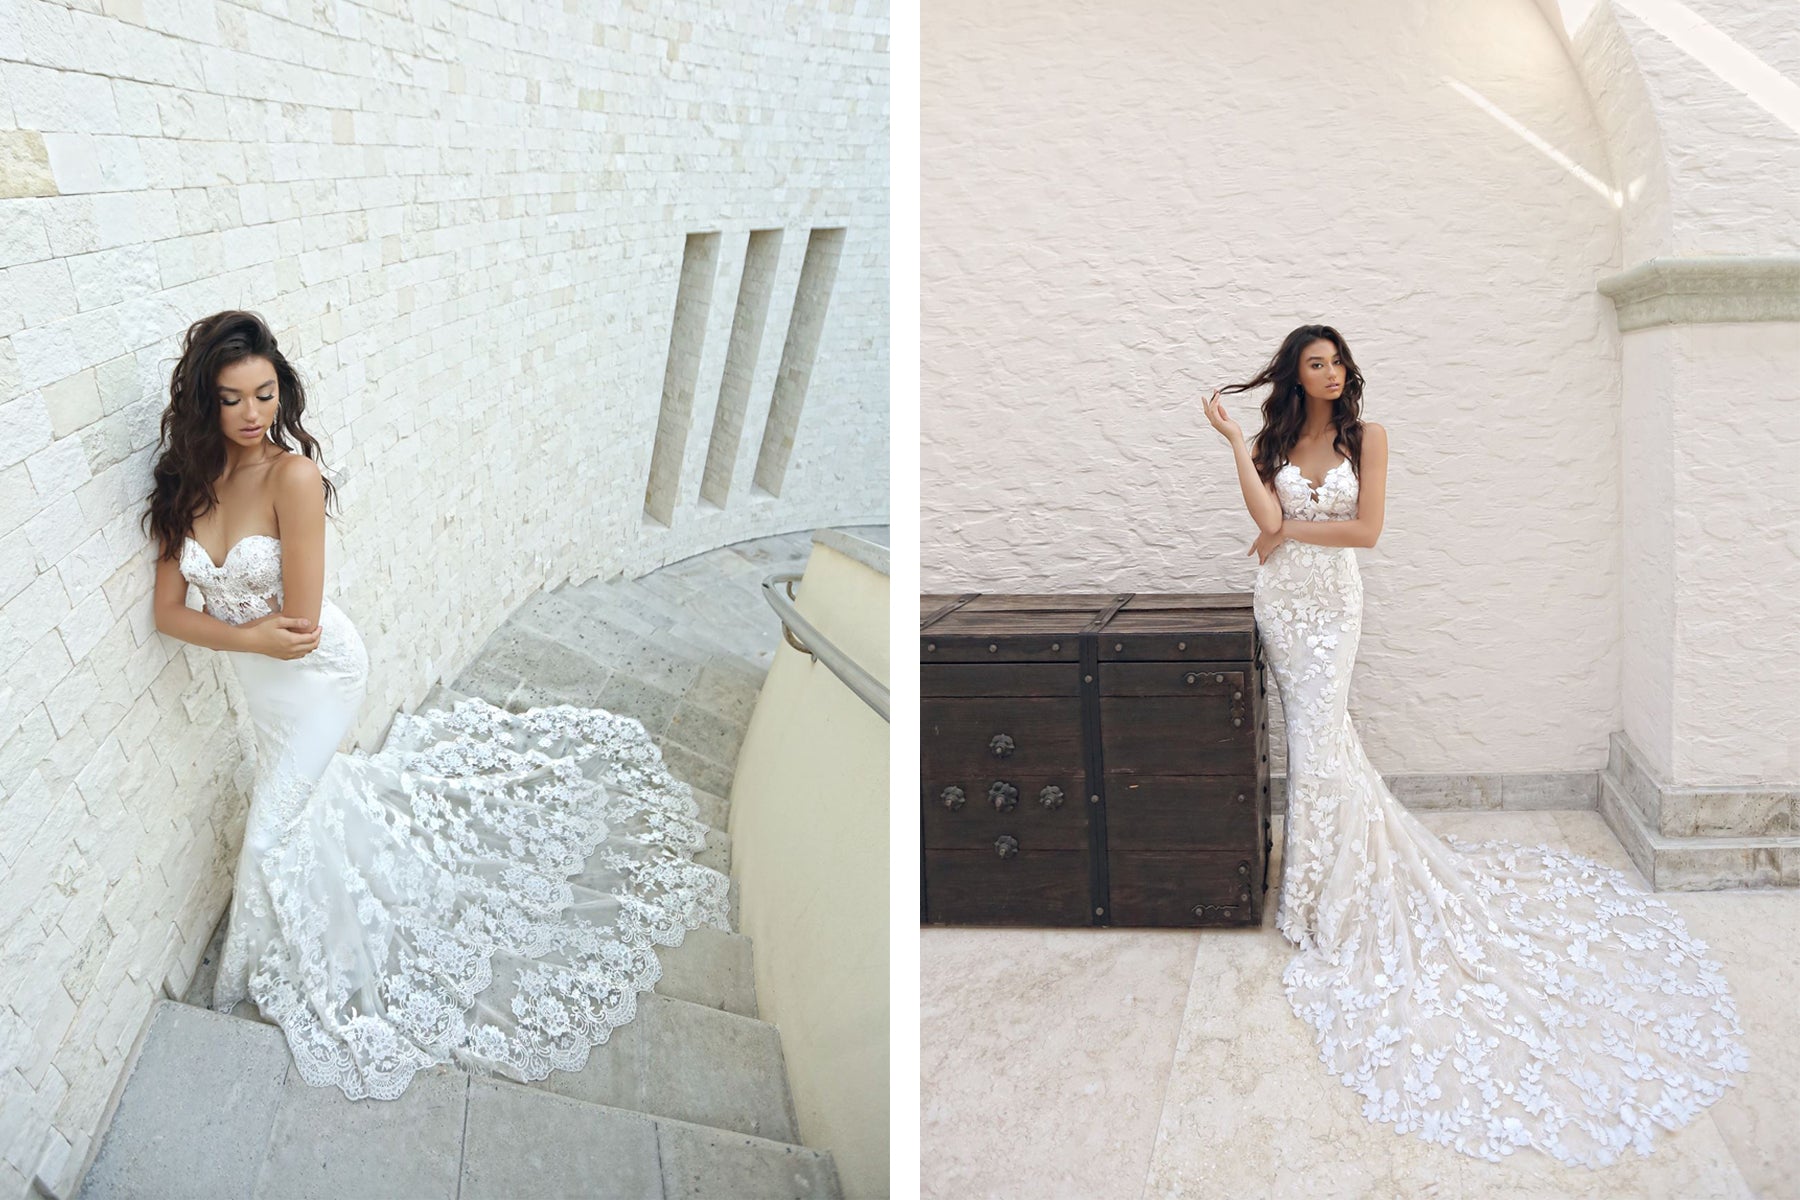 Eternal_bridal_wedding_dress_enzoani_2019_collection_11